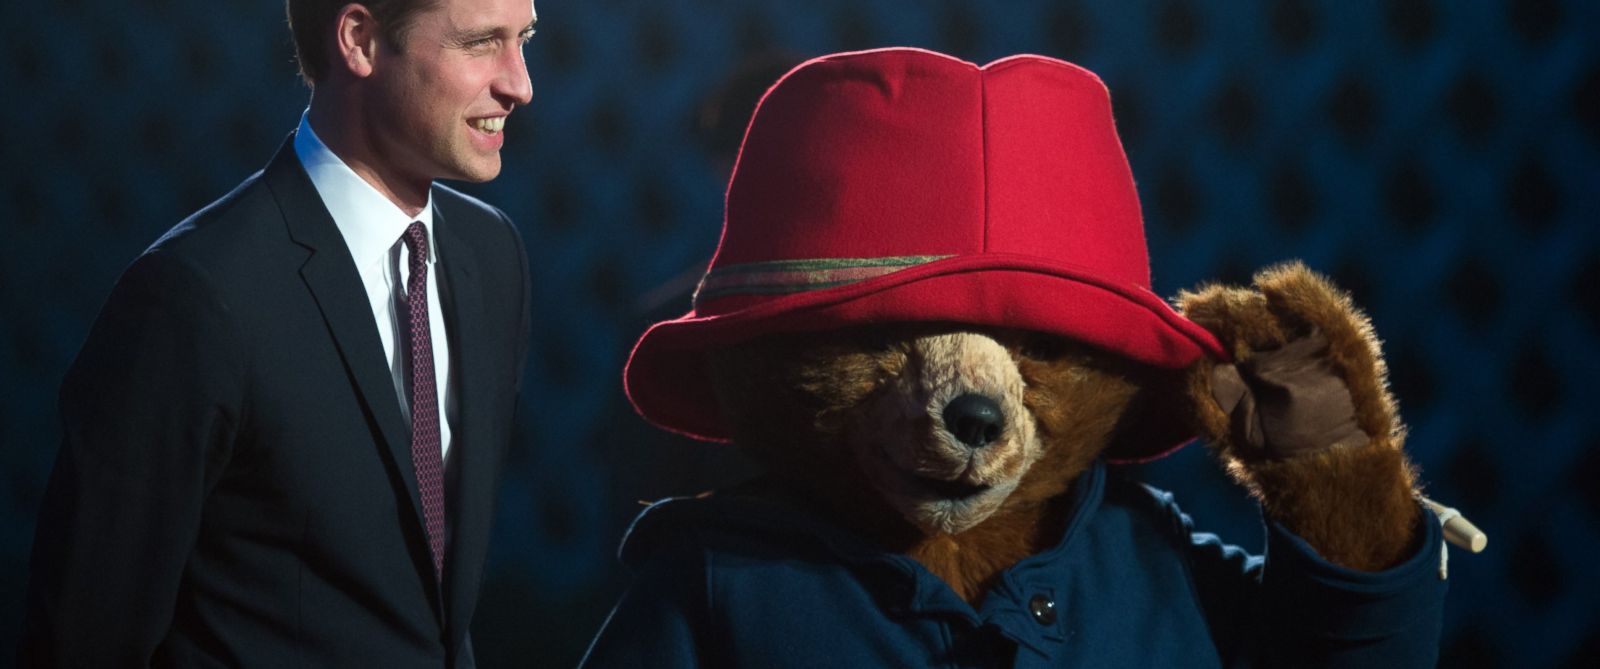 Prince William Meets Paddington Bear in China - ABC News